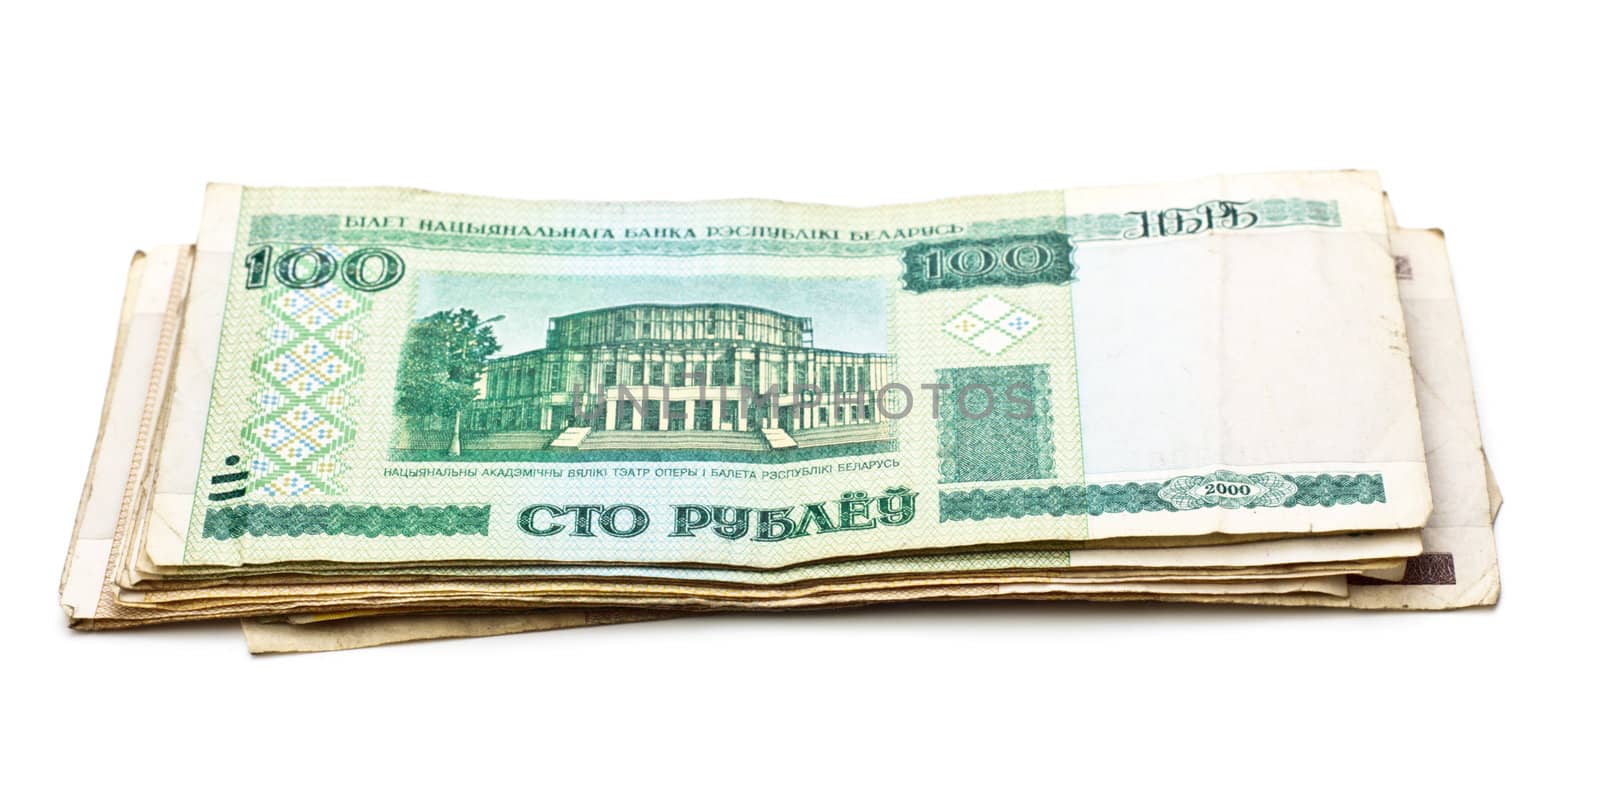 Banknotes Of Belarus by petr_malyshev